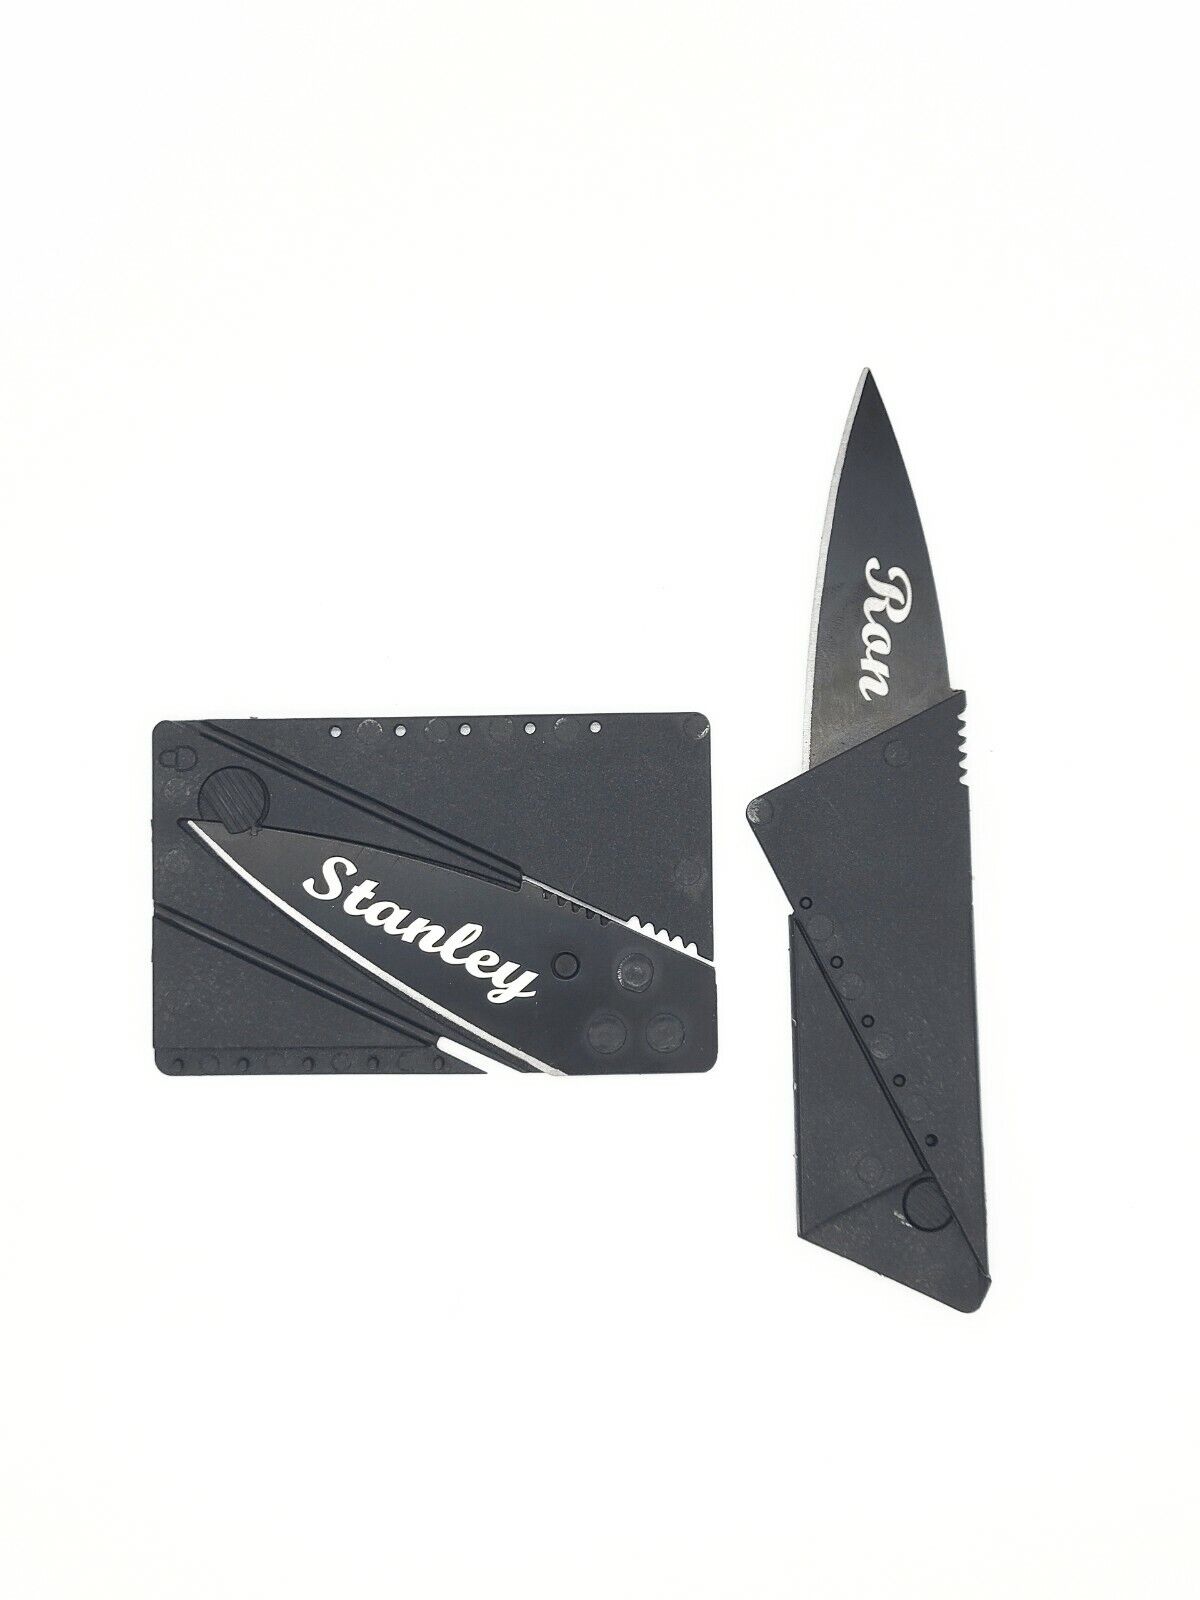 Personalized Credit Card Knife/ survival knife/ laser engraved gift knife.